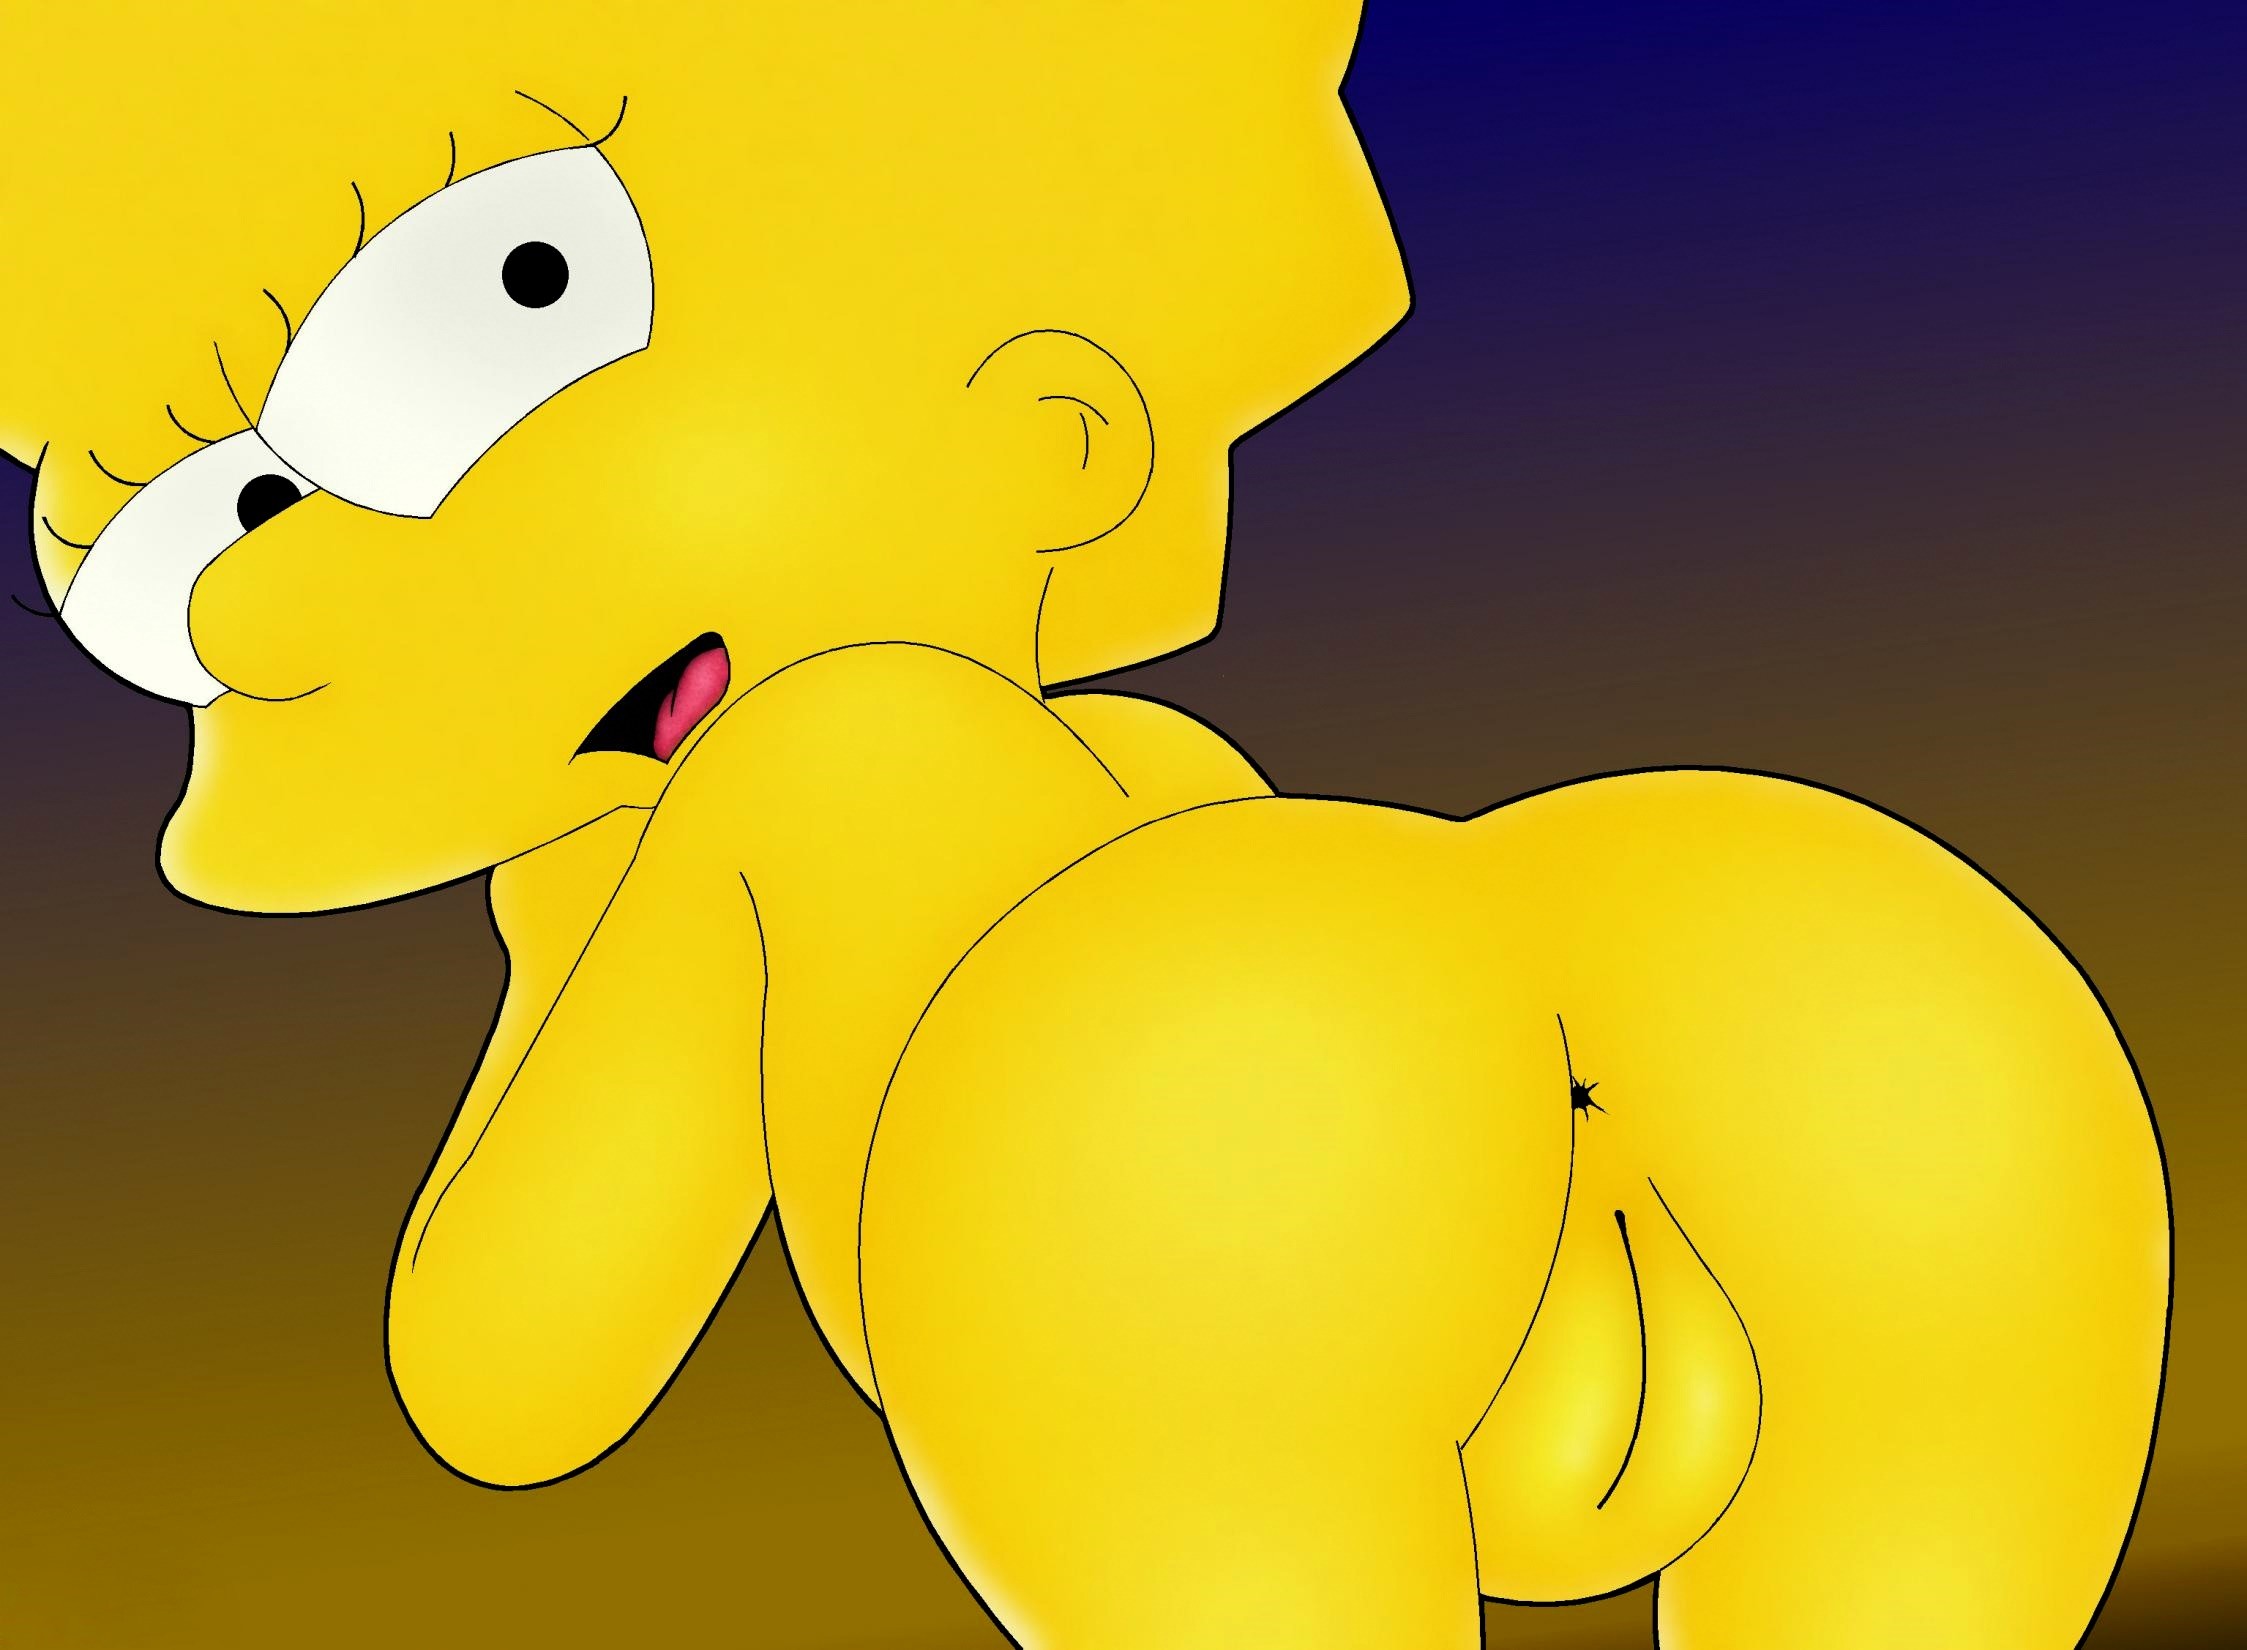 1998008 - Lisa_Simpson The_Simpsons xibe.jpg. 